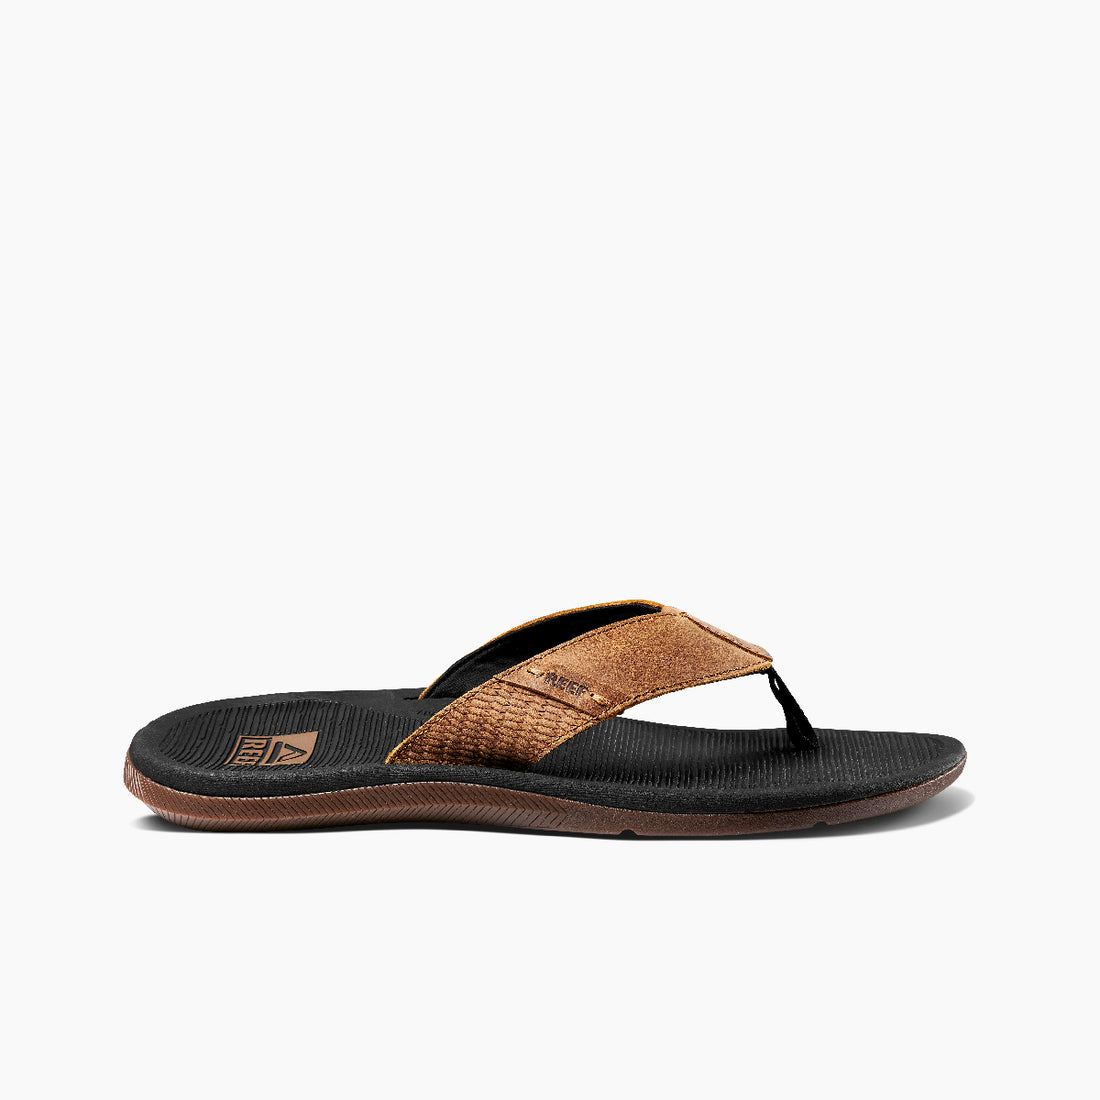 Reef Men's Santa Ana LE Premium Leather Flip Flop Sandals Black And Tan - CI8103 Black And Tan - Black And Tan, 11